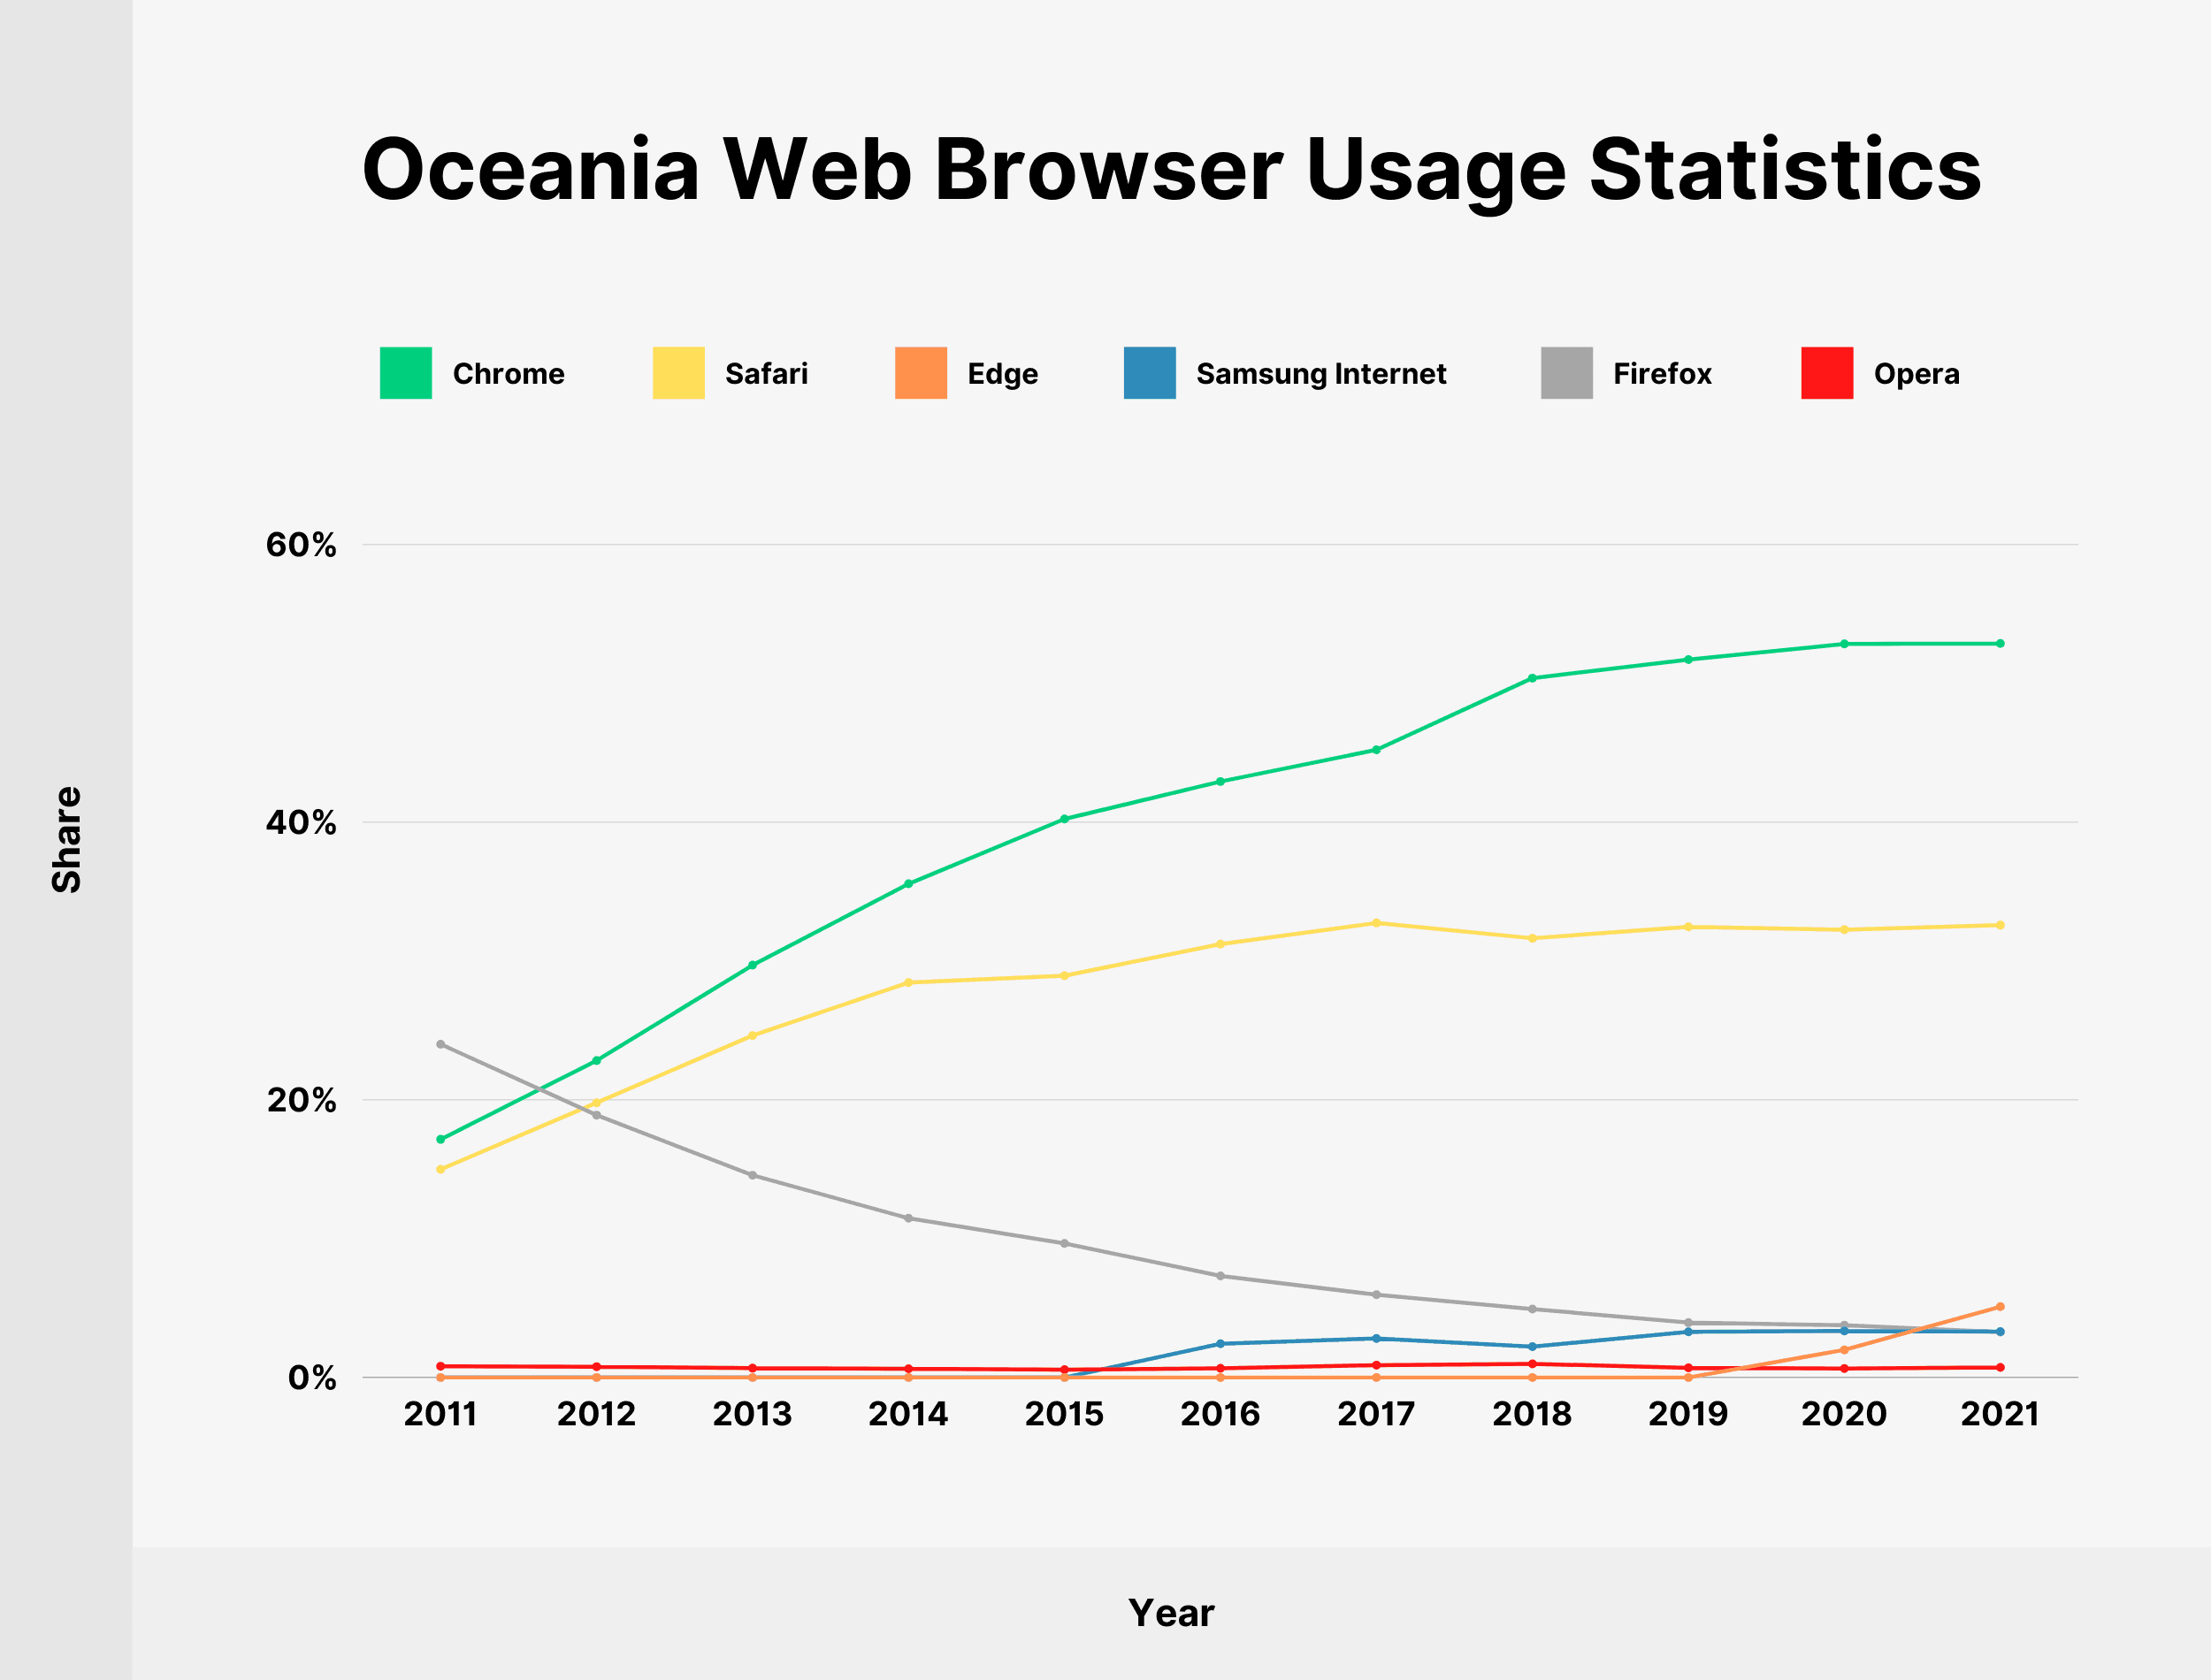 Oceania Web Browser Usage Statistics